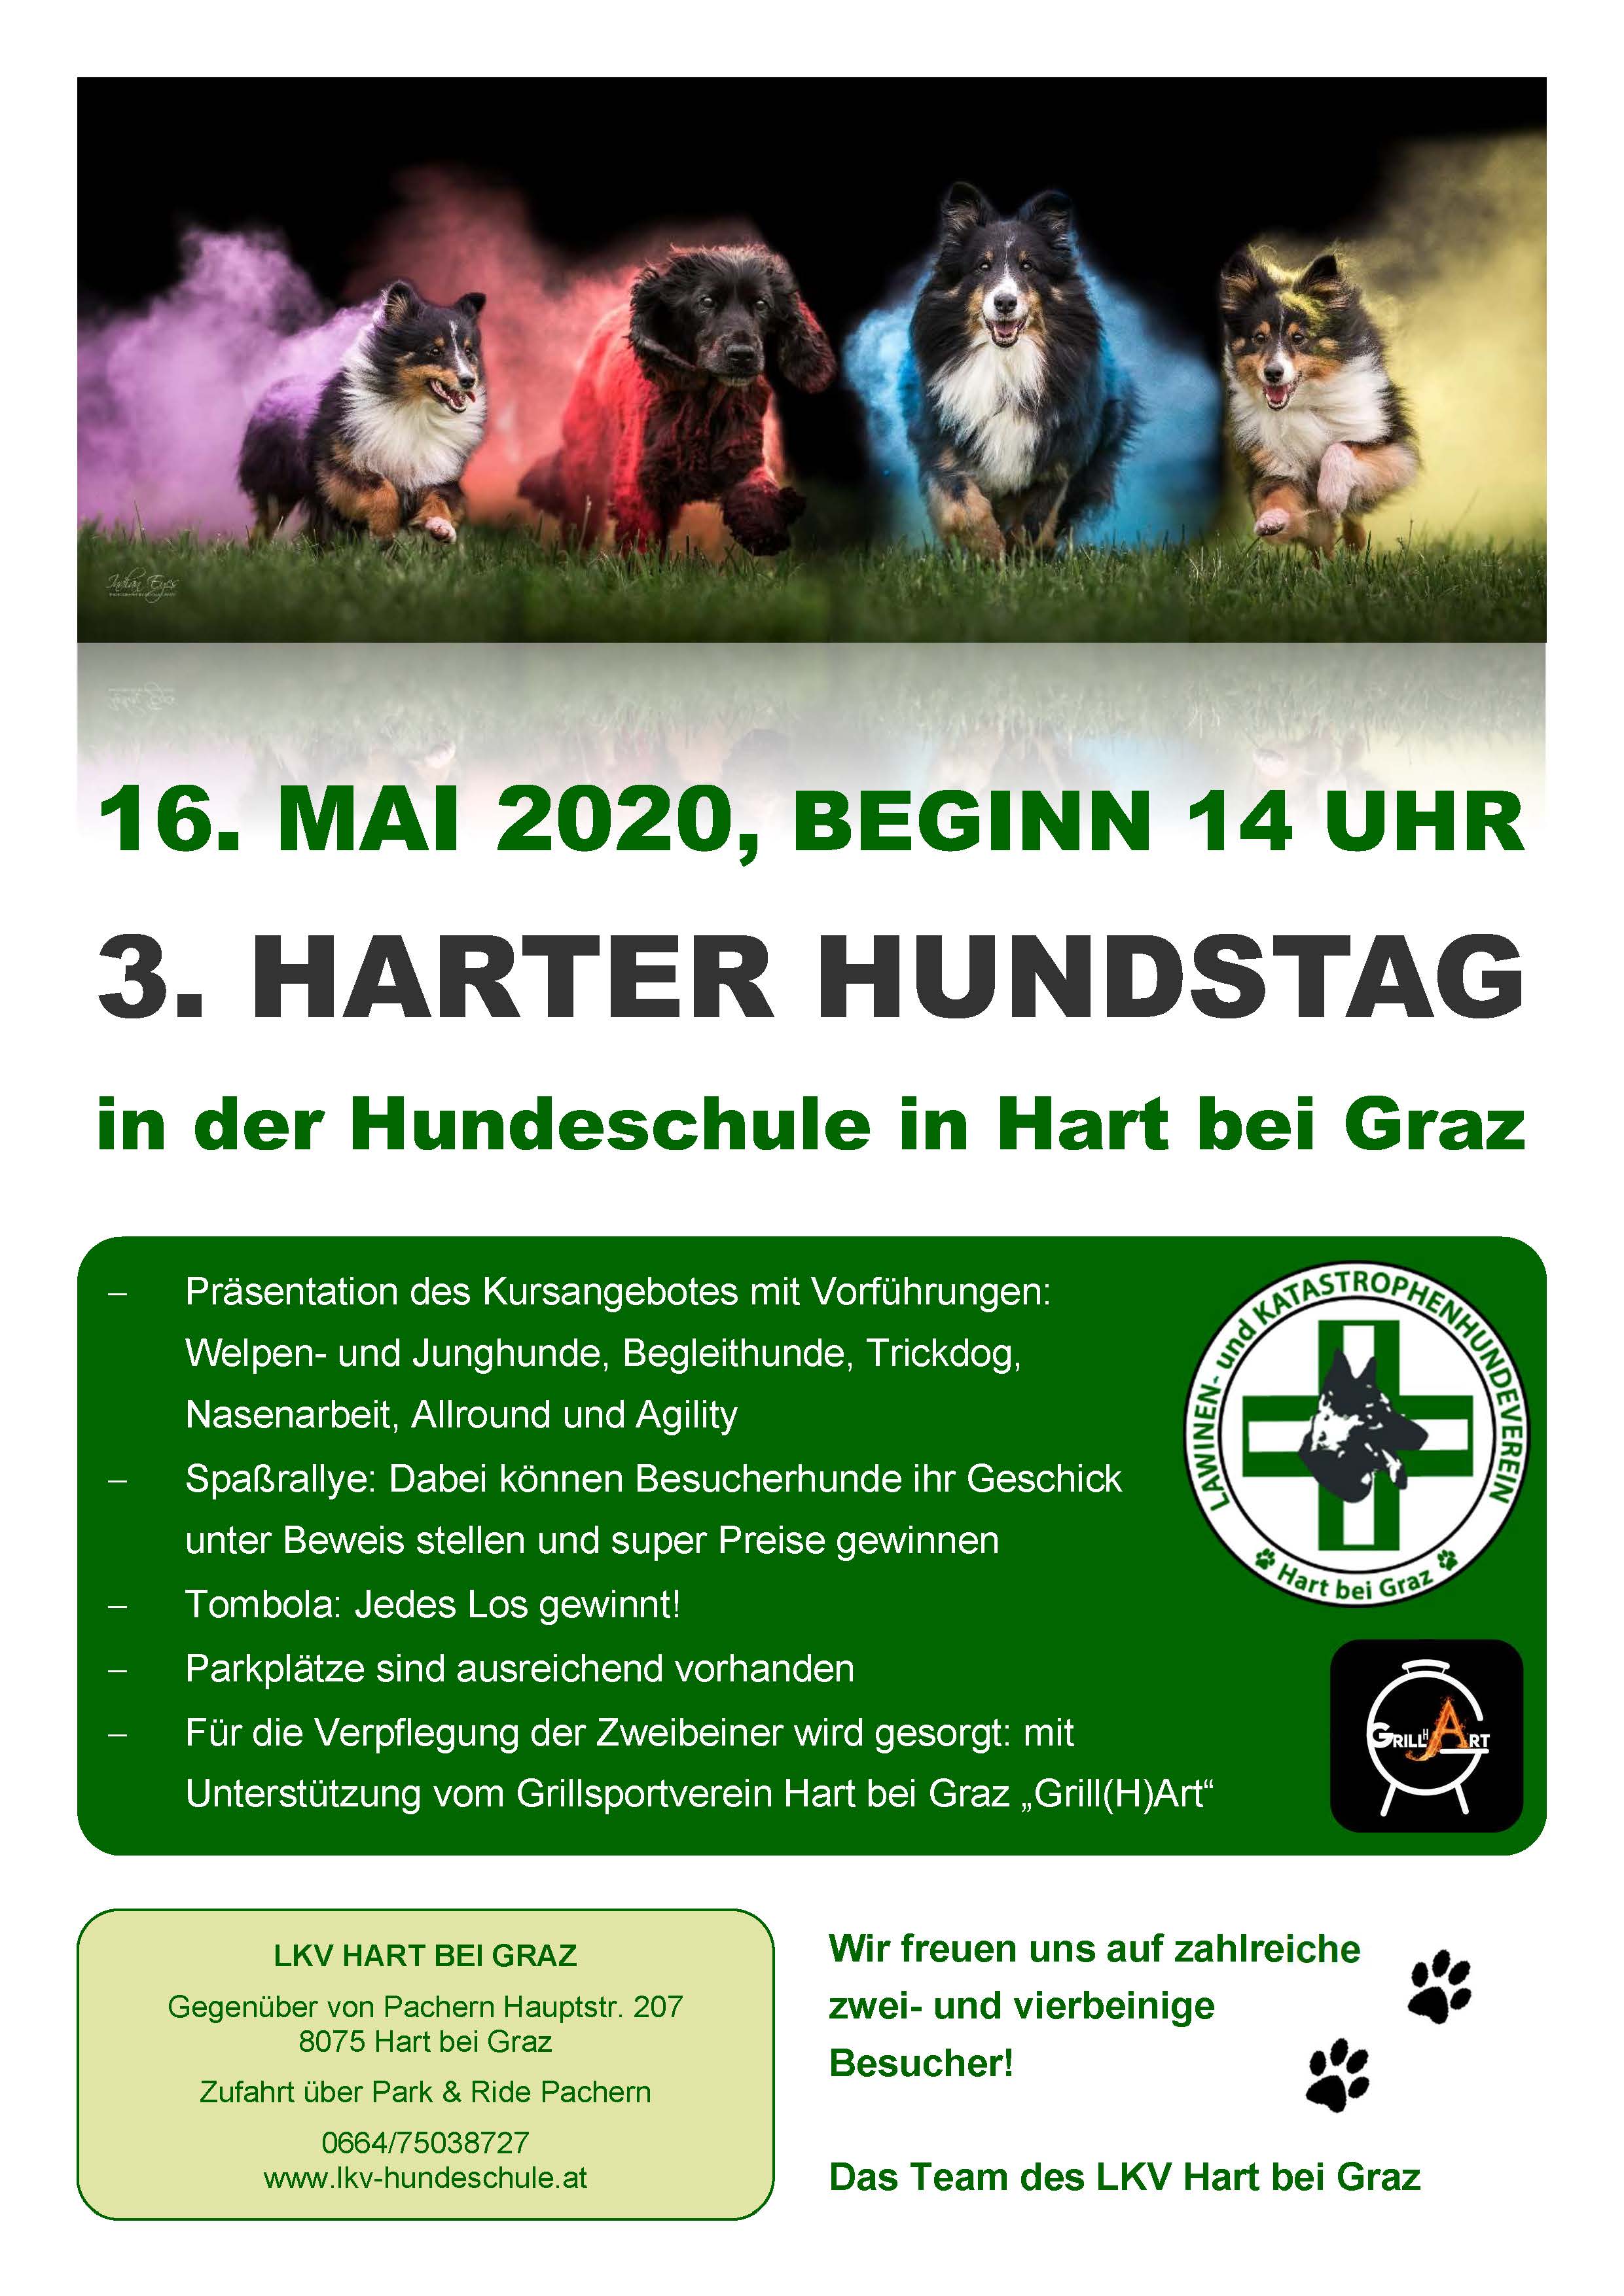 20200224_harter_hundstag3_einladung.jpg